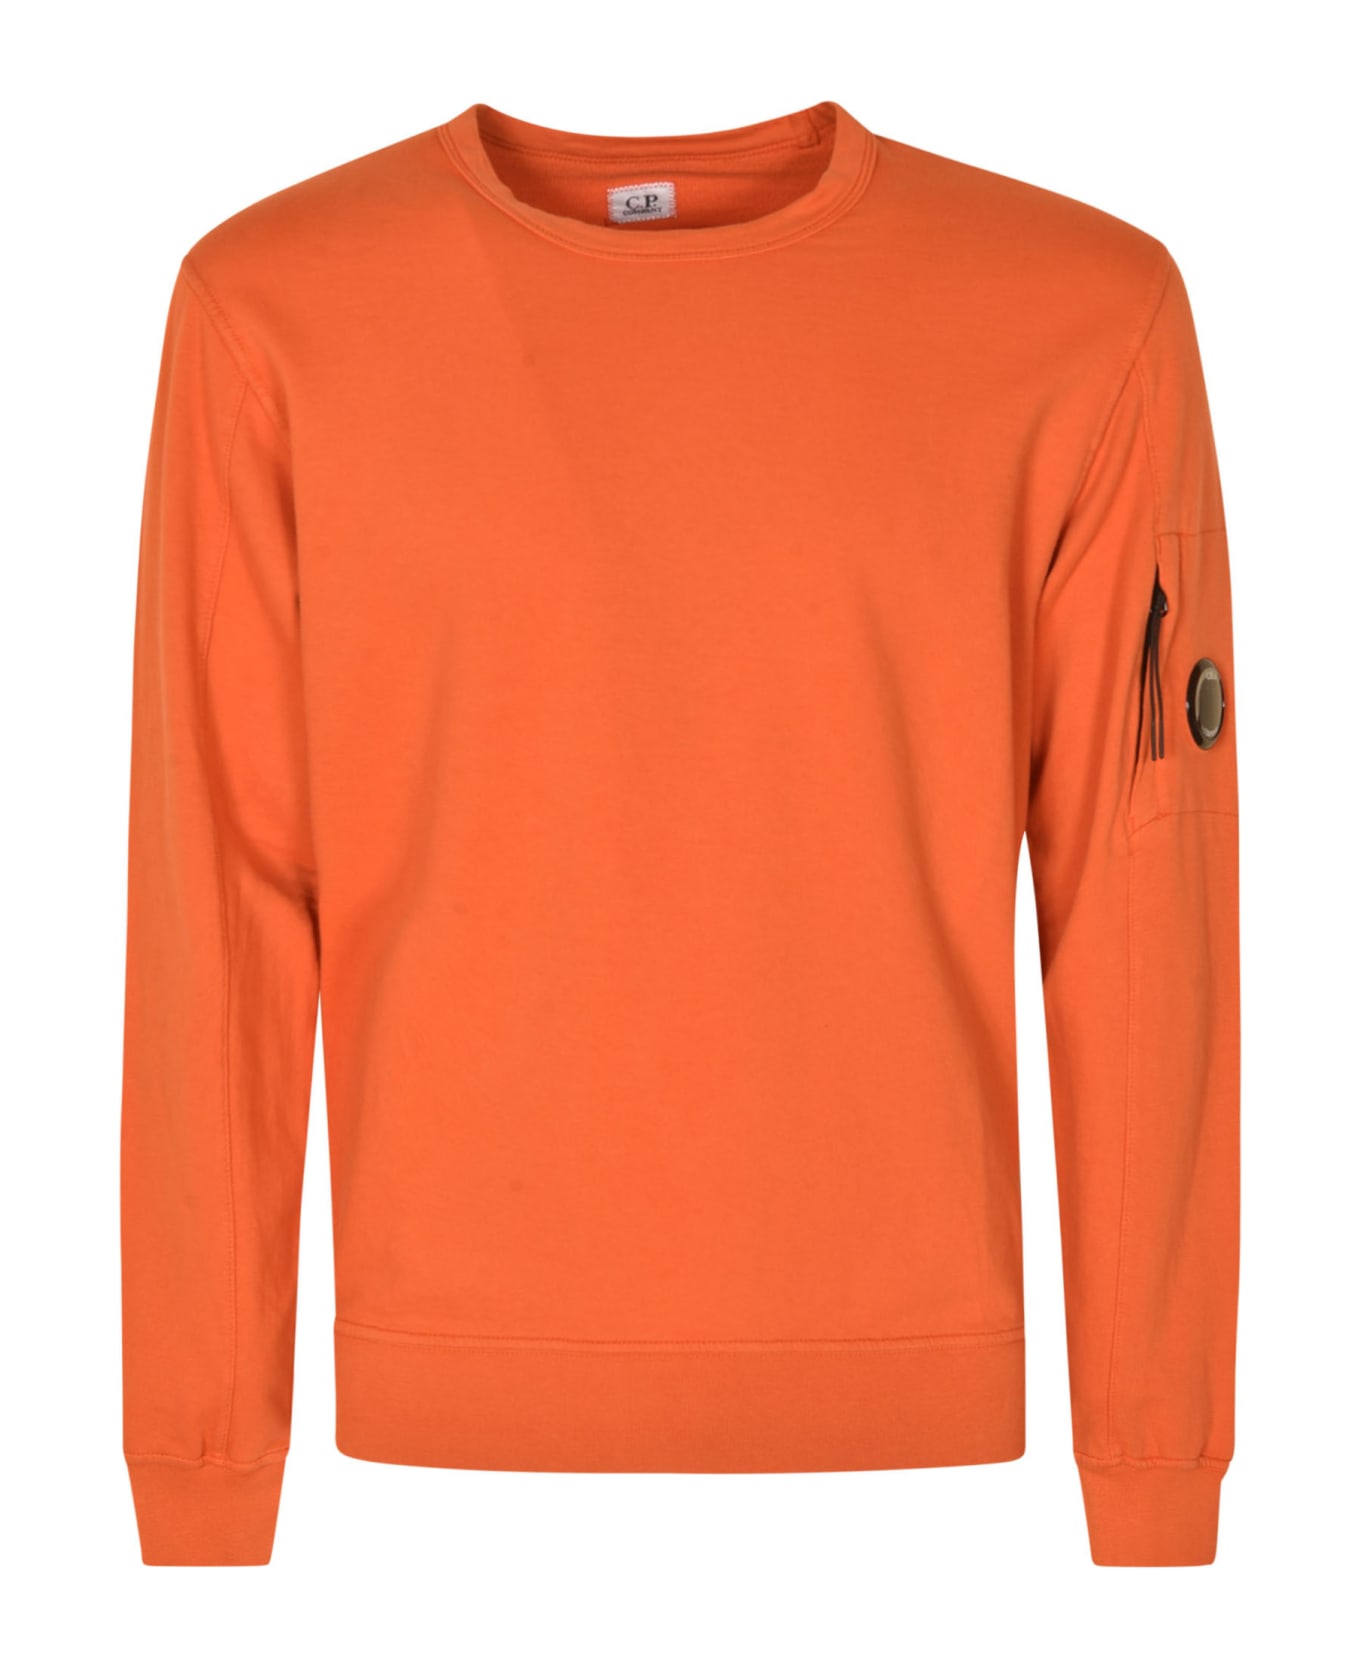 C.P. Company Light Fleece Sweatshirt - Orange